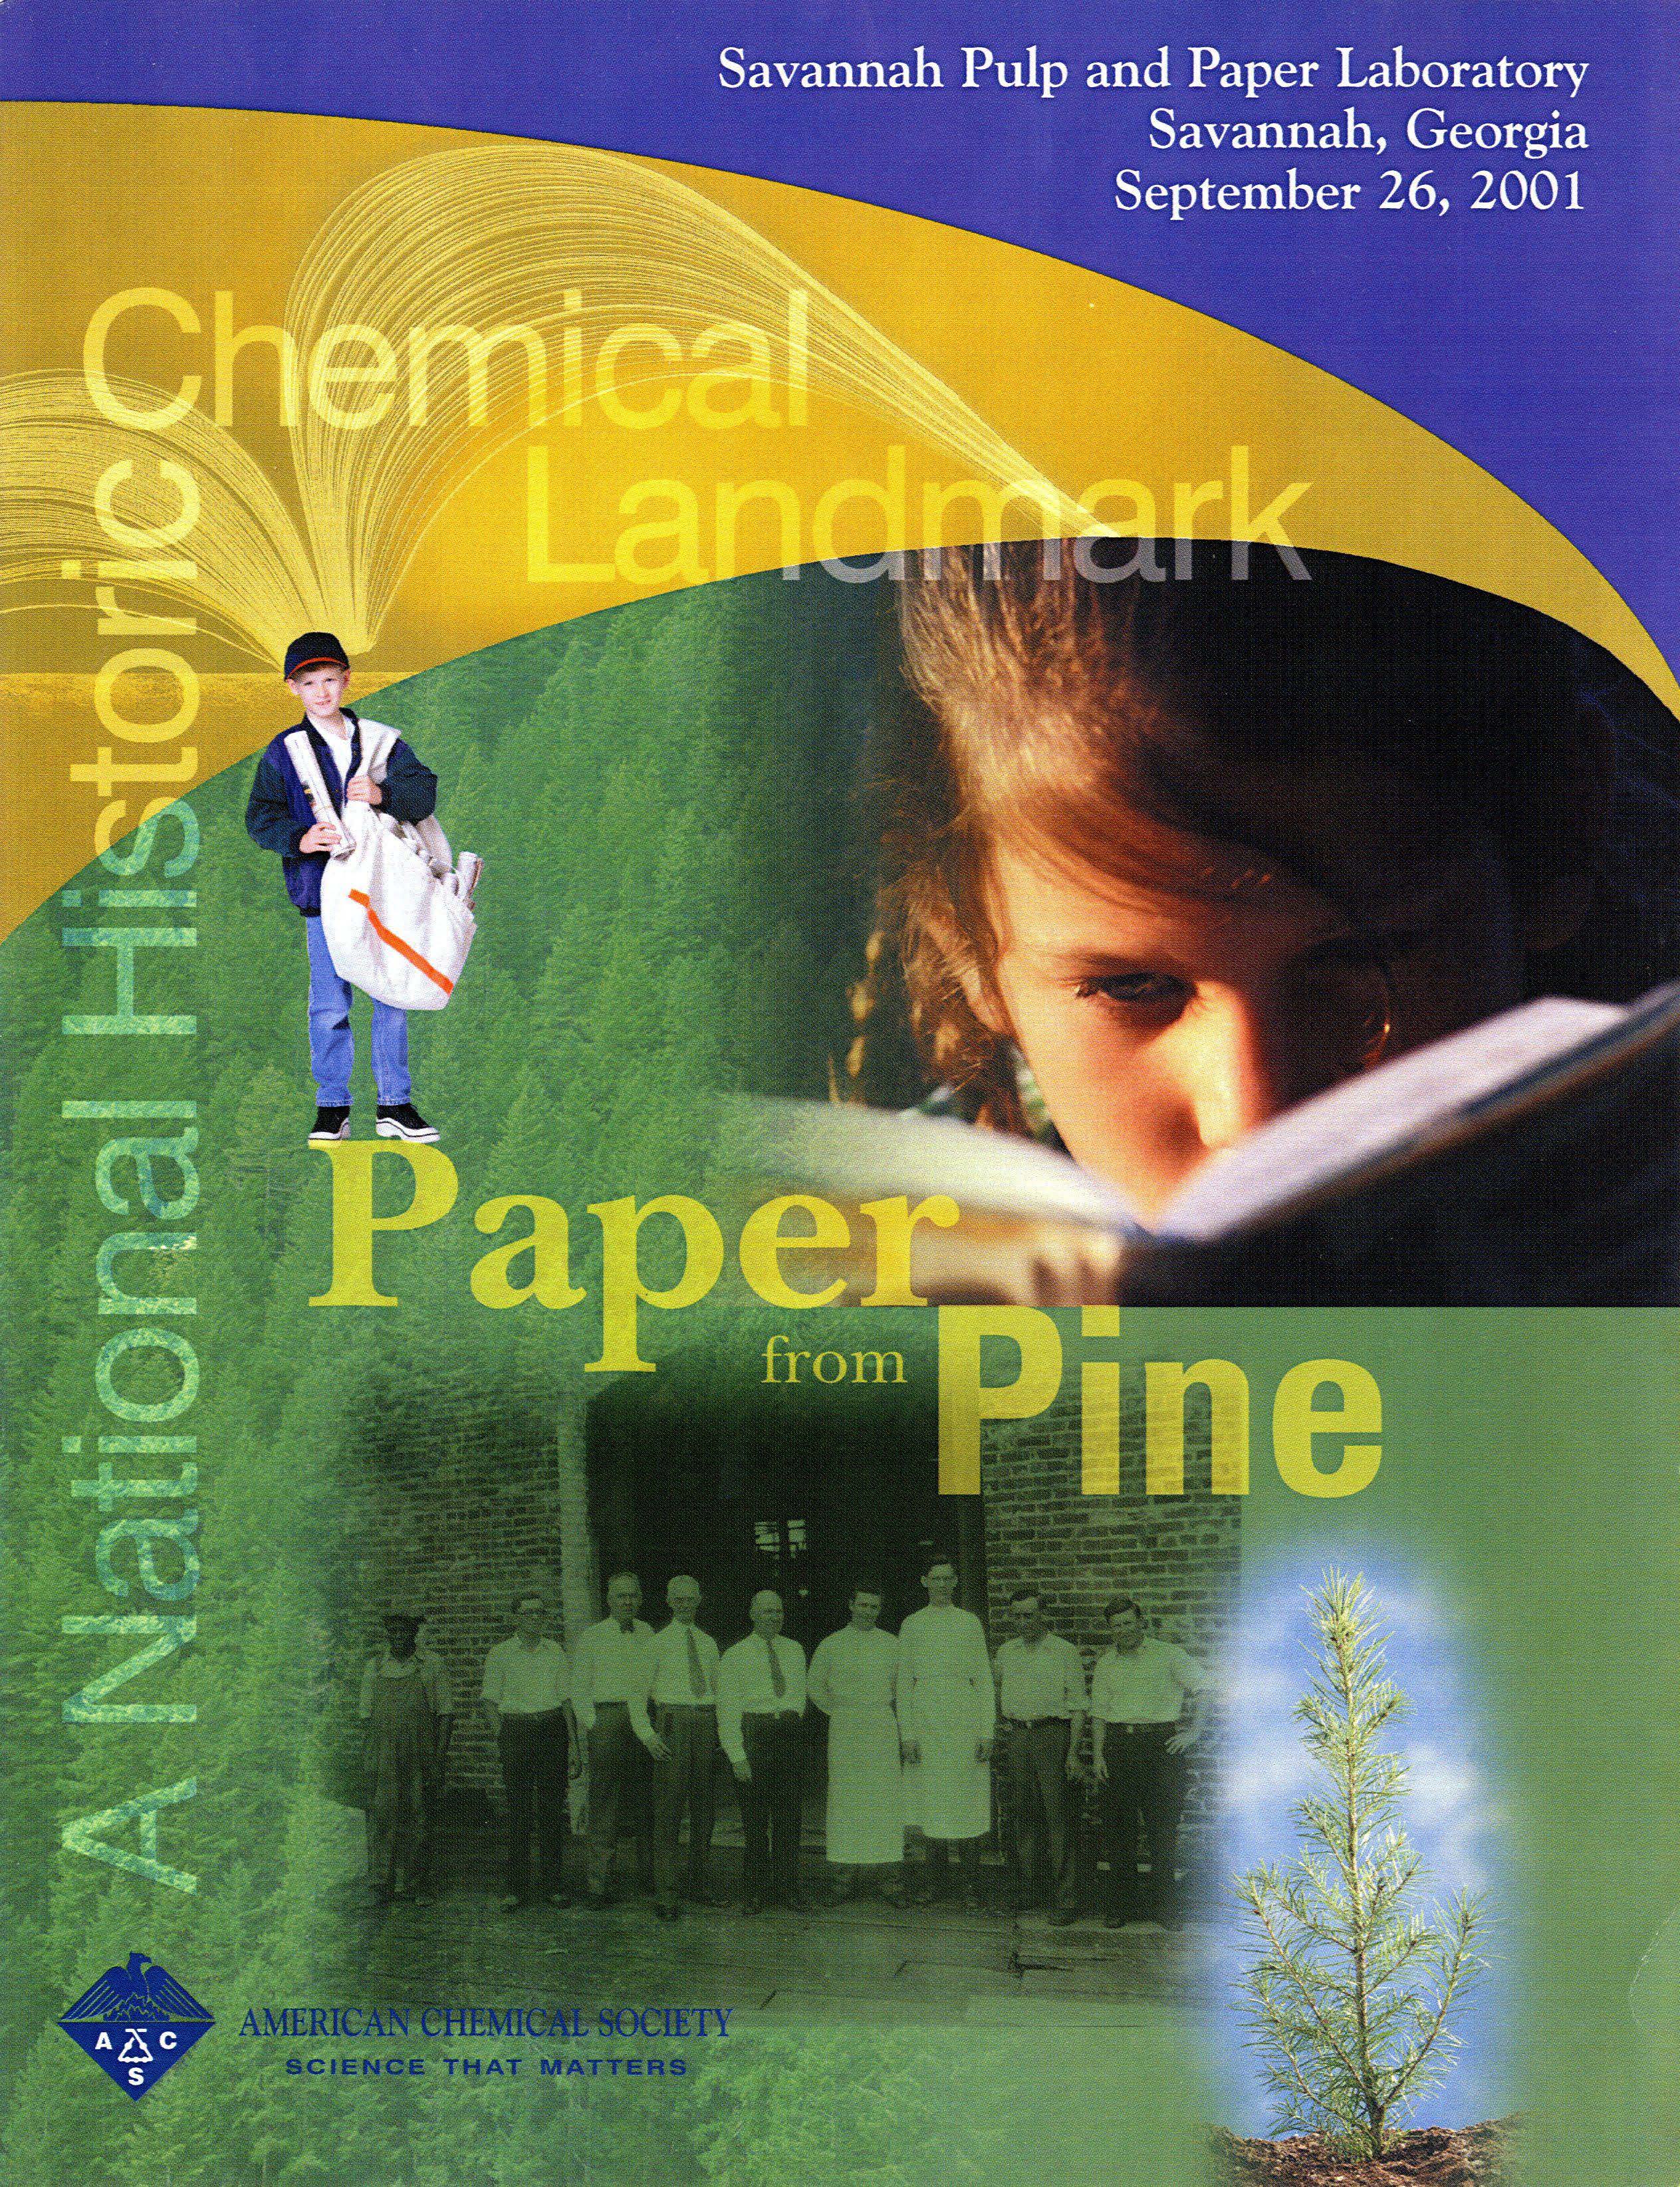 “Savannah Pulp and Paper Laboratory” commemorative booklet